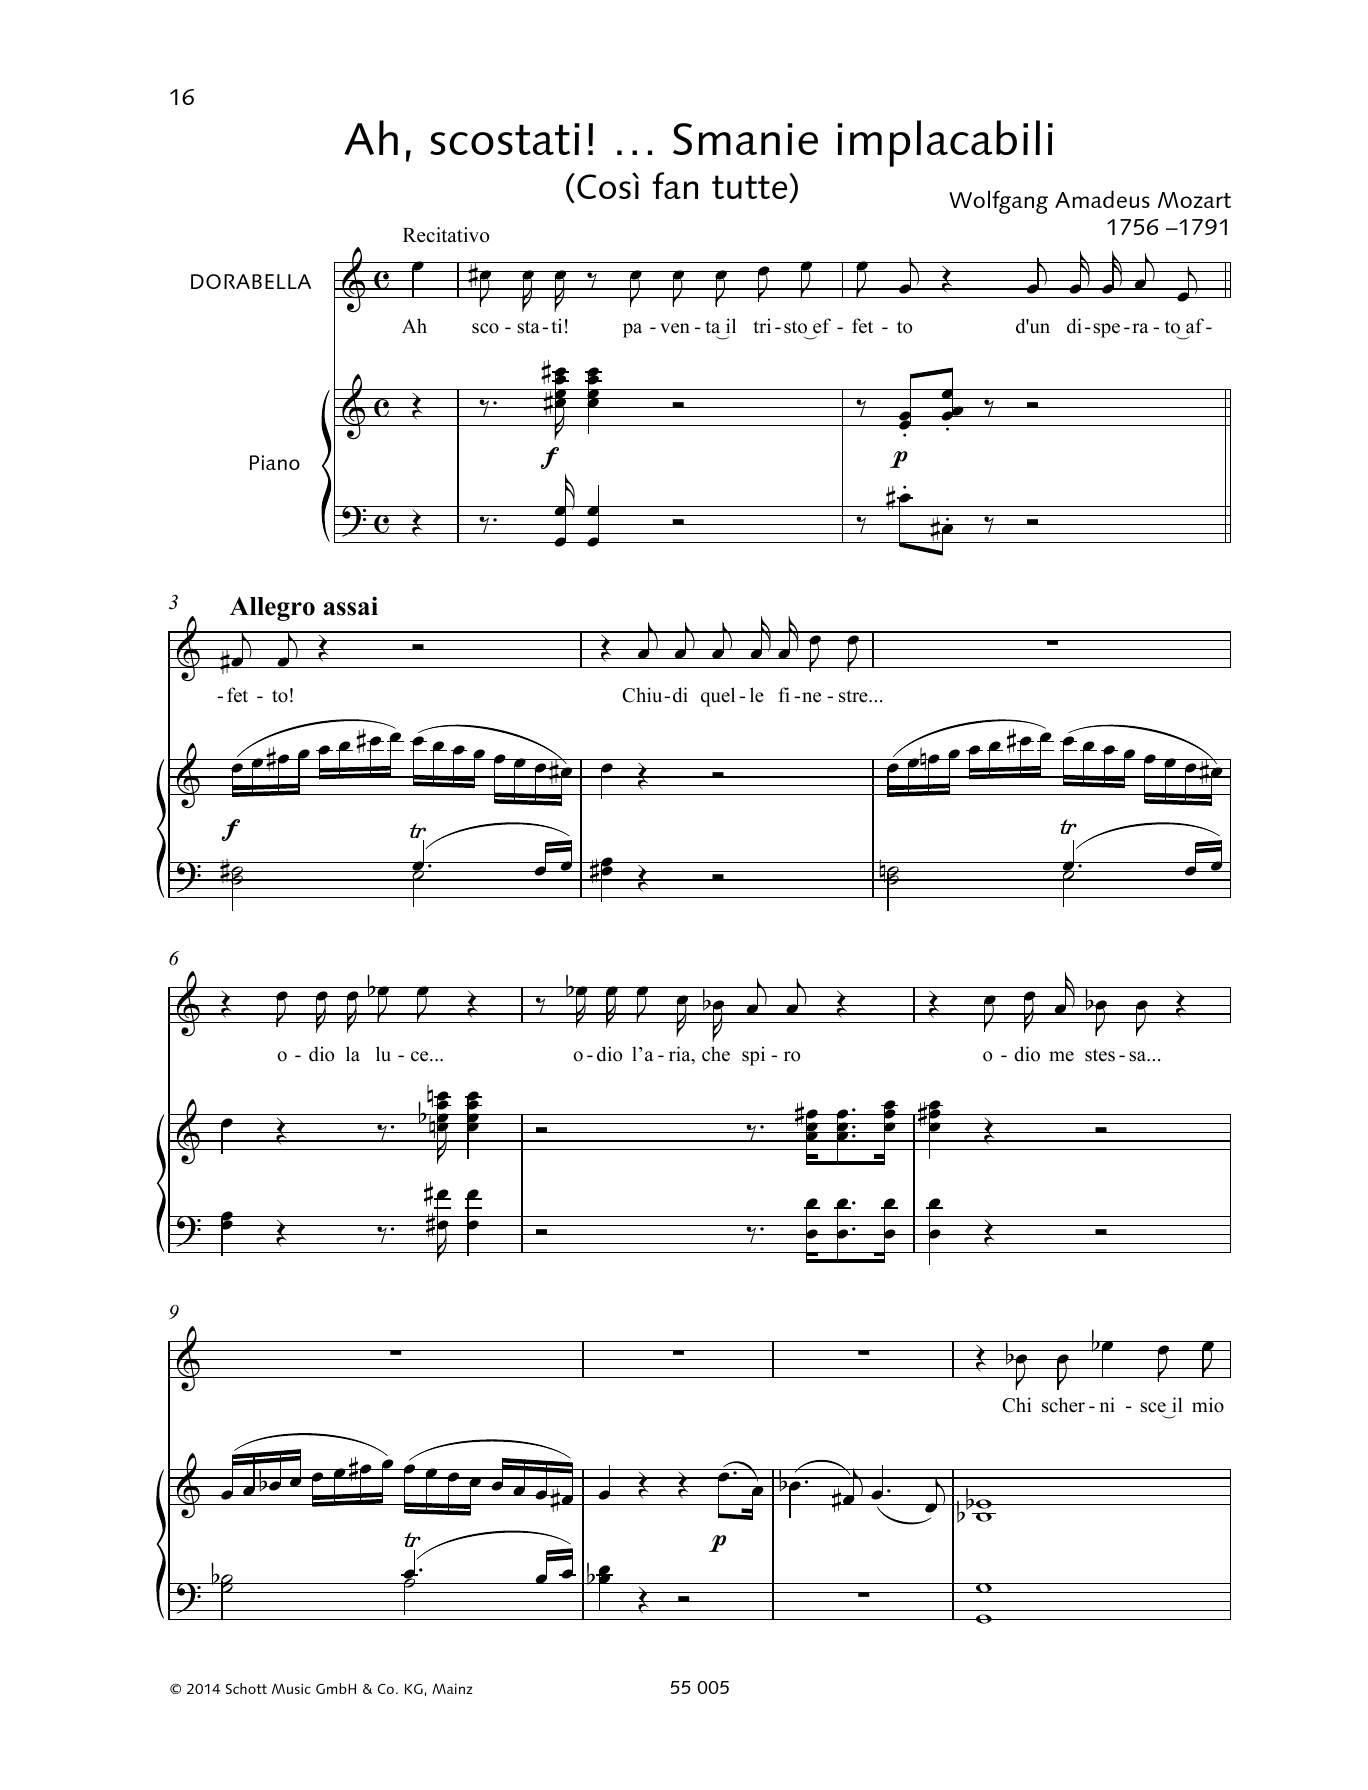 Download Wolfgang Amadeus Mozart Ah, scostati!... Smanie implacabili Sheet Music